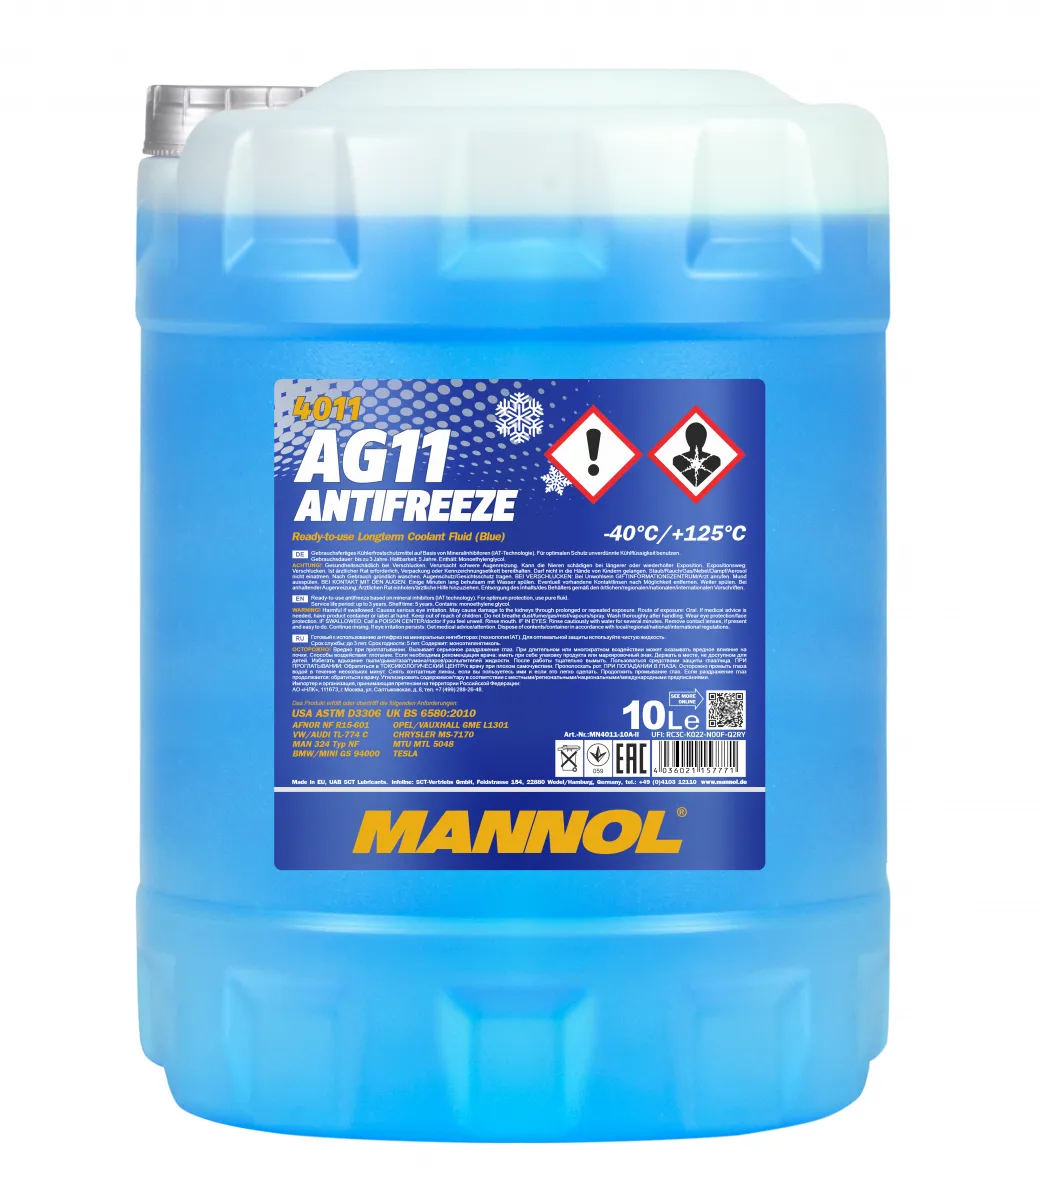 mannol antifreeze ag11 (-40 °C)#1